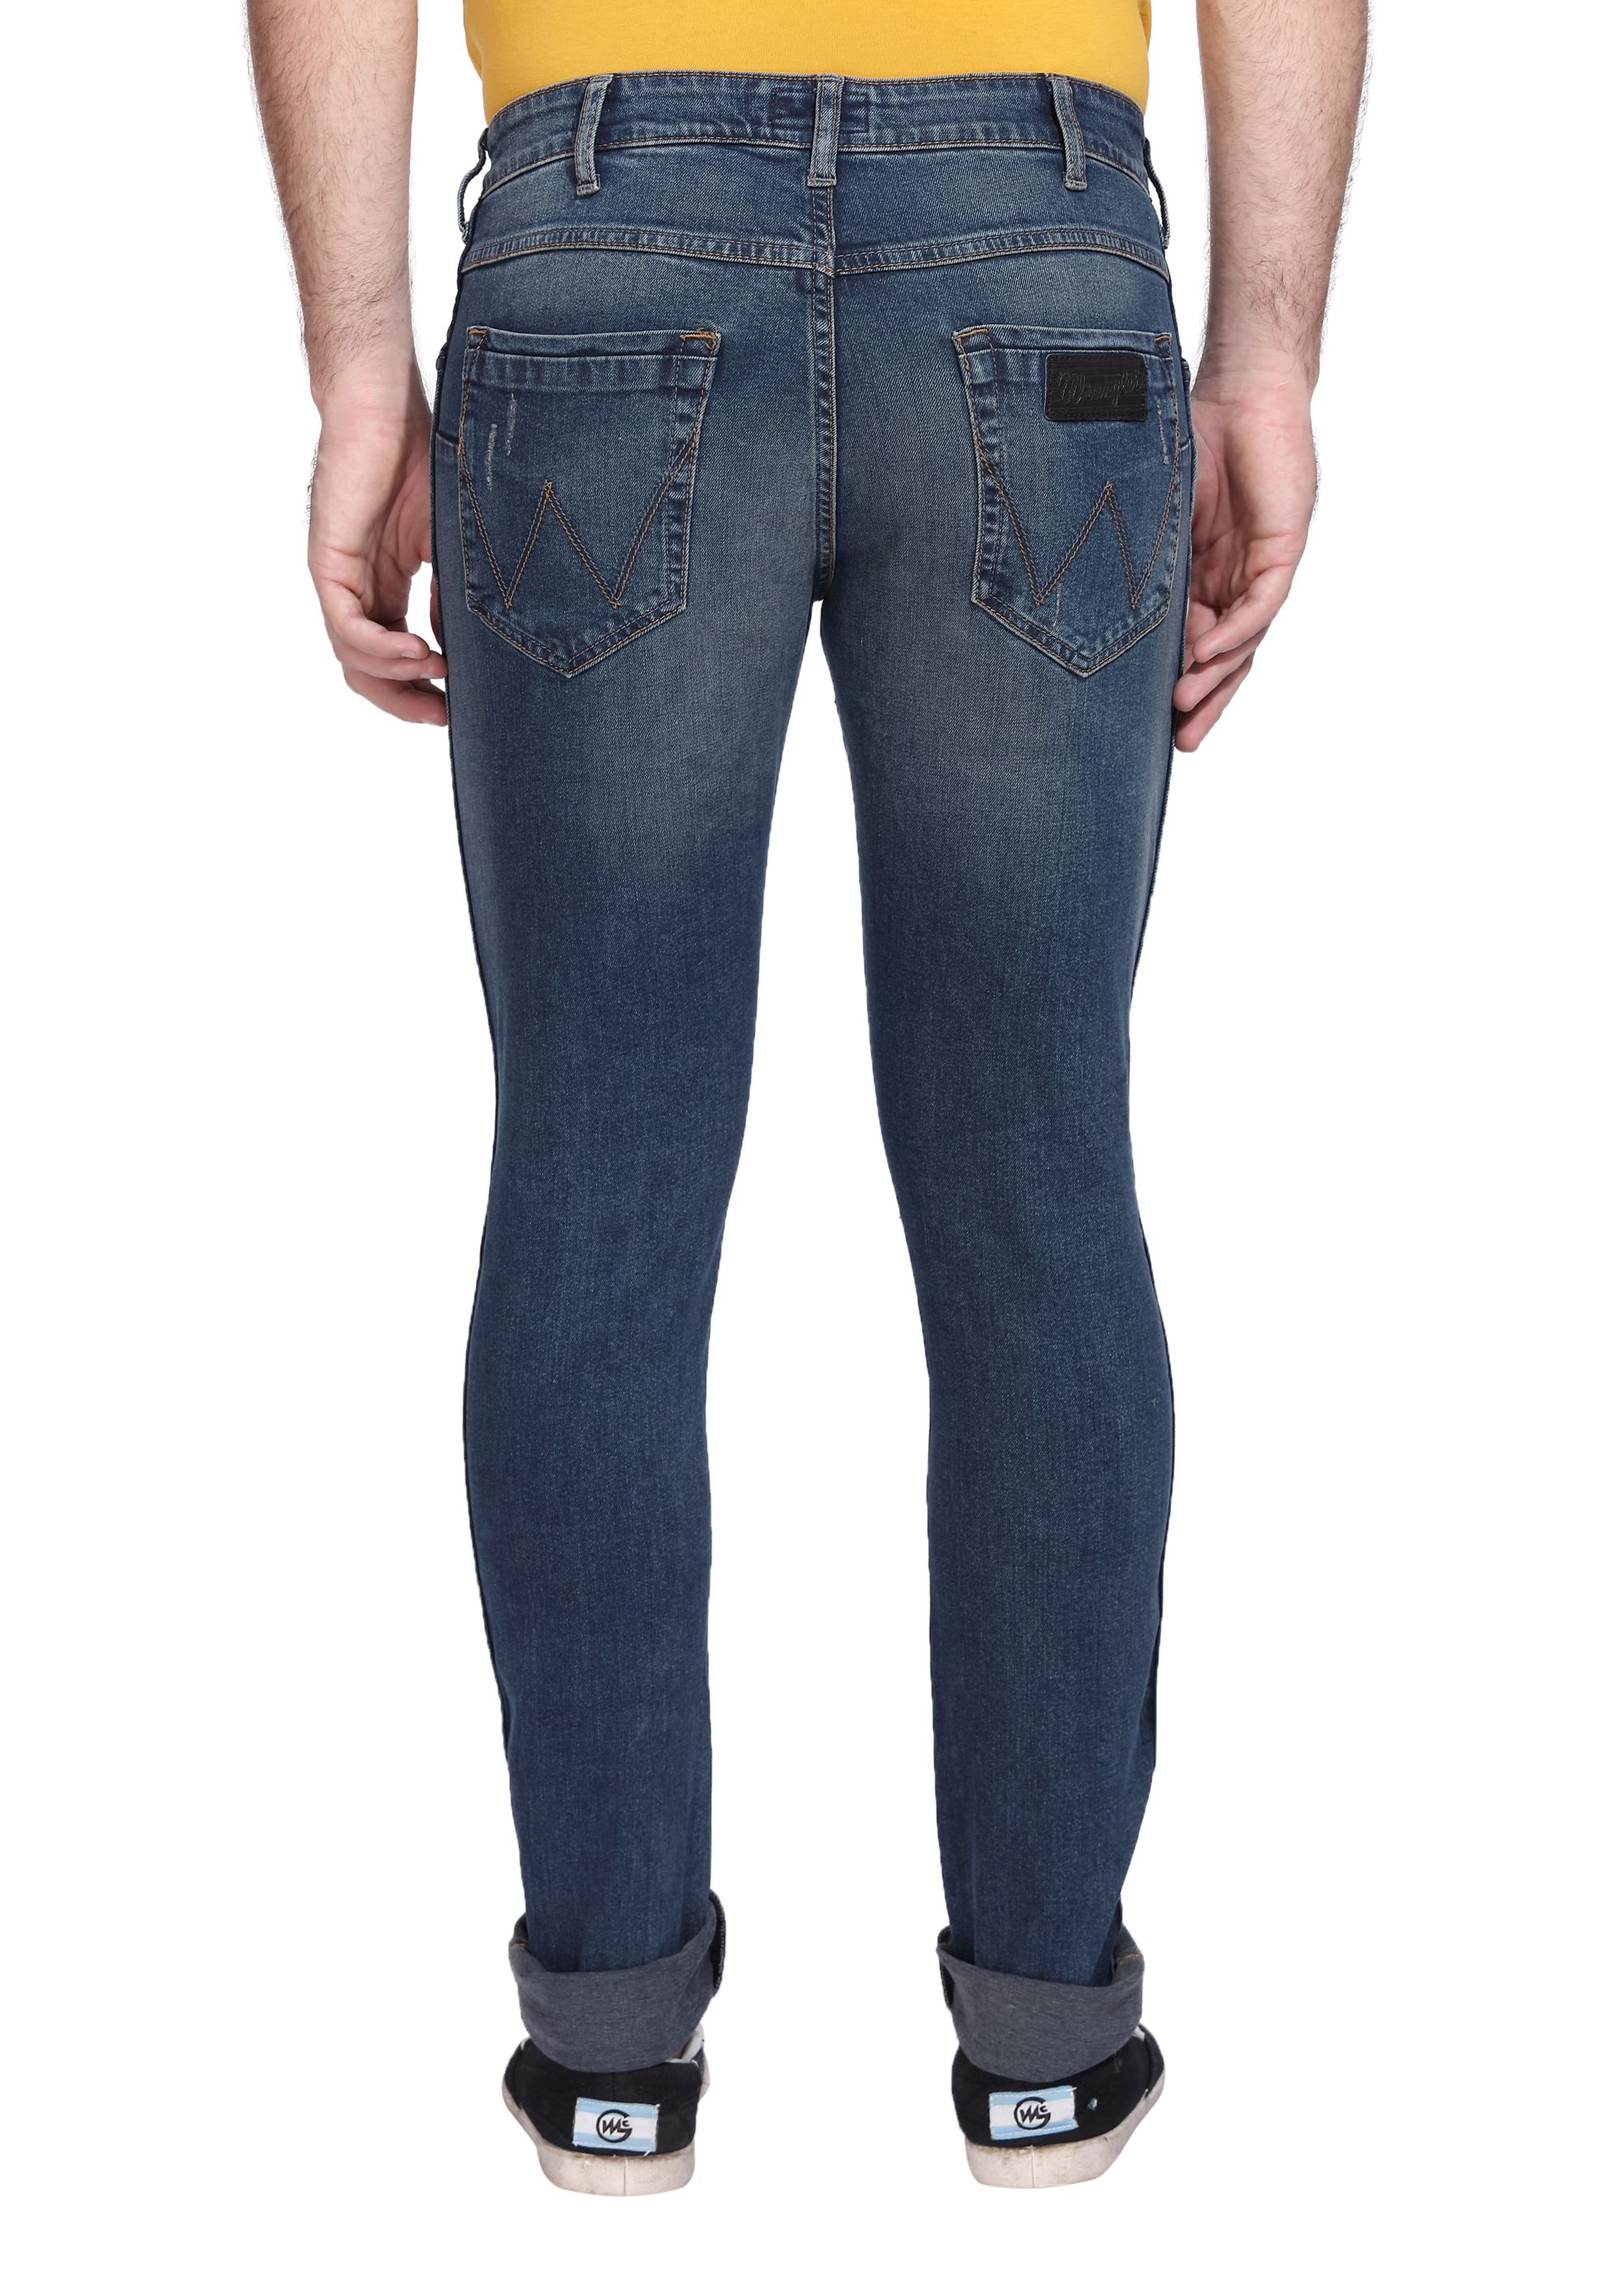  Wrangler  Blue Skinny  Jeans  Buy Wrangler  Blue Skinny  